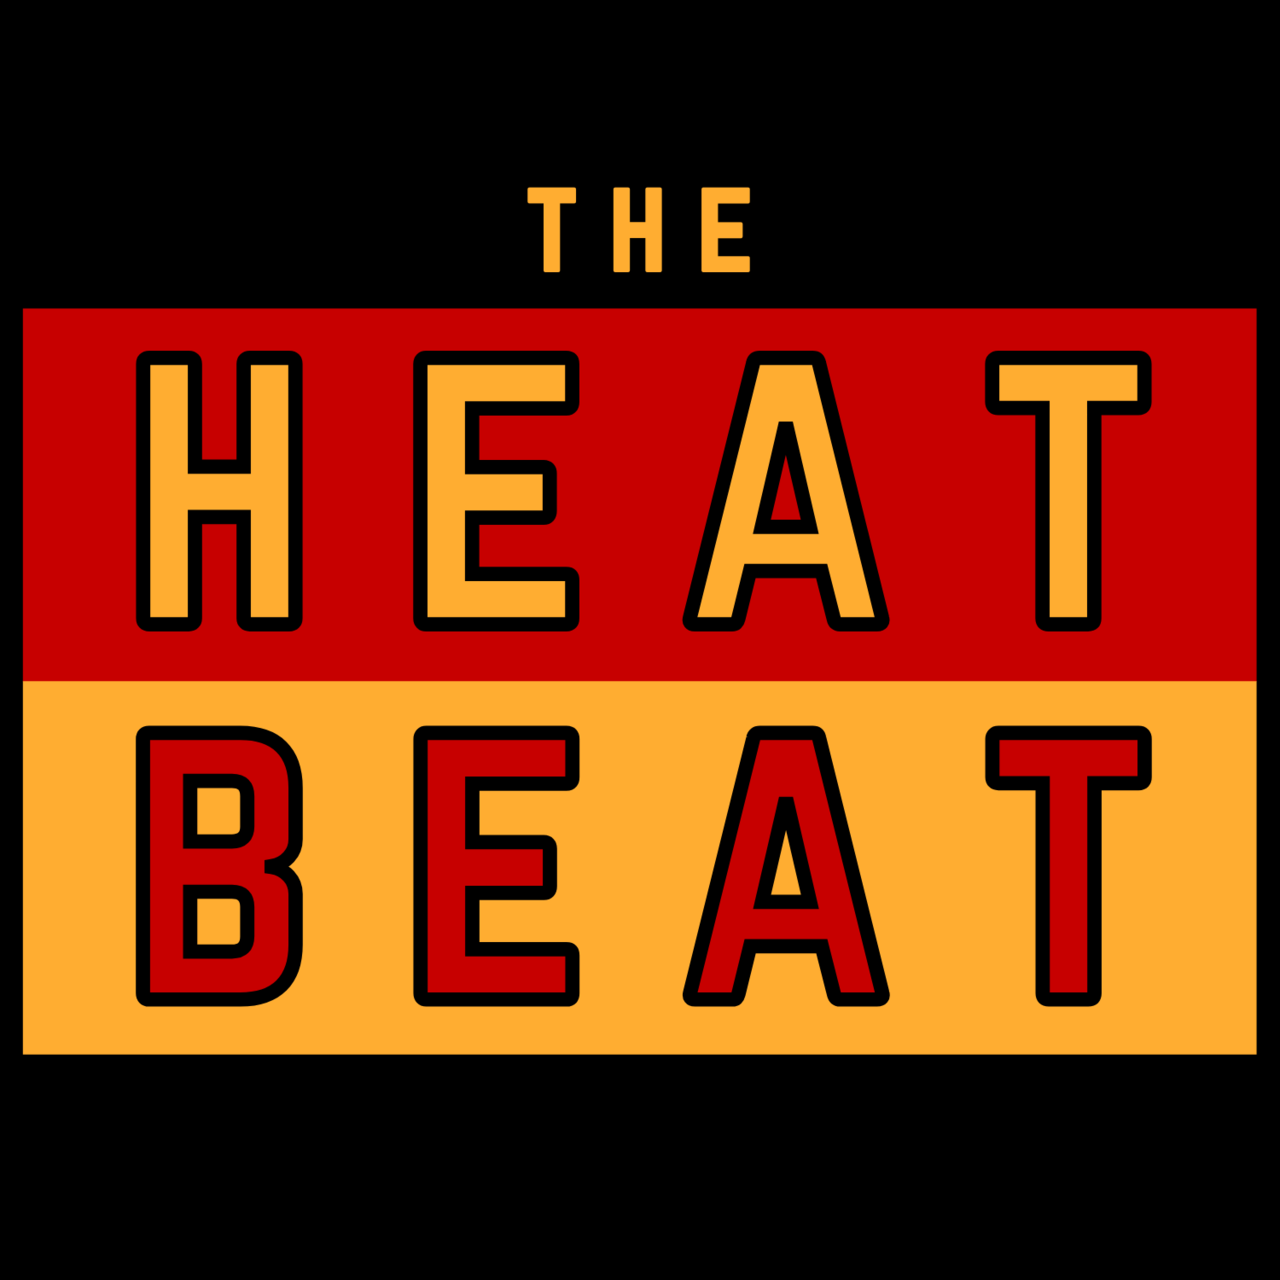 The Heat Beat